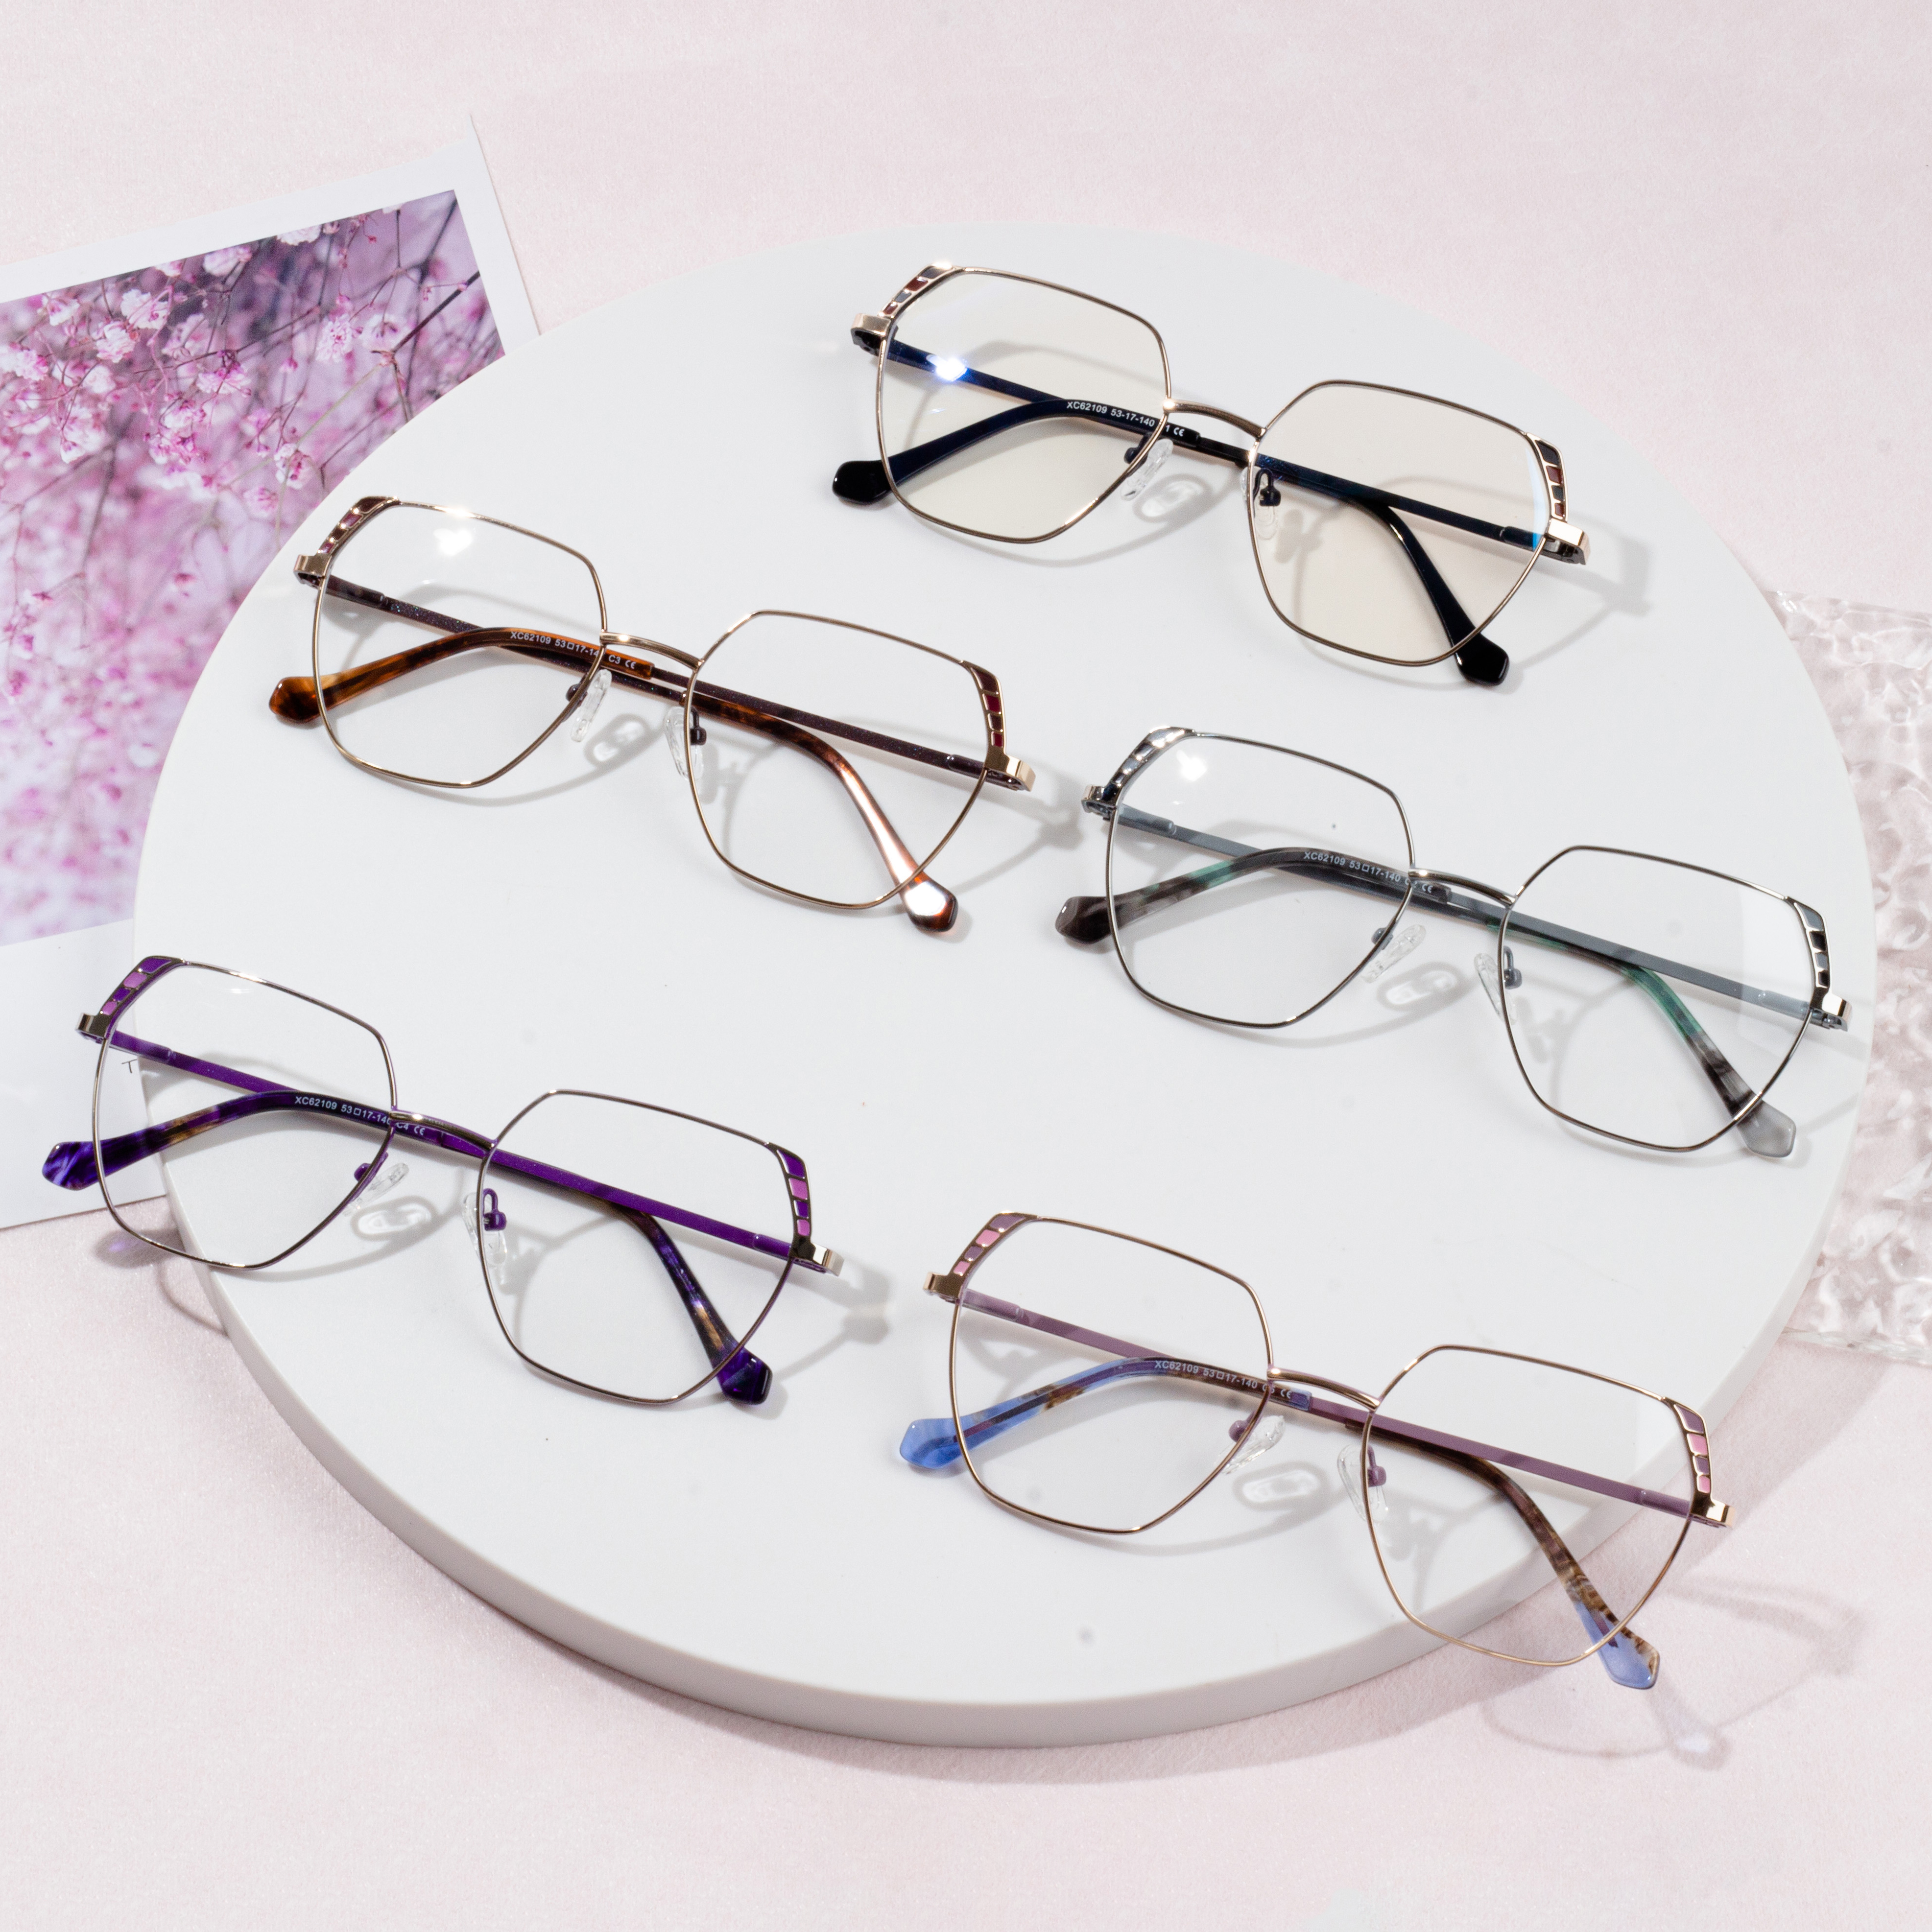 China Best Selling Designer Metal Glasses